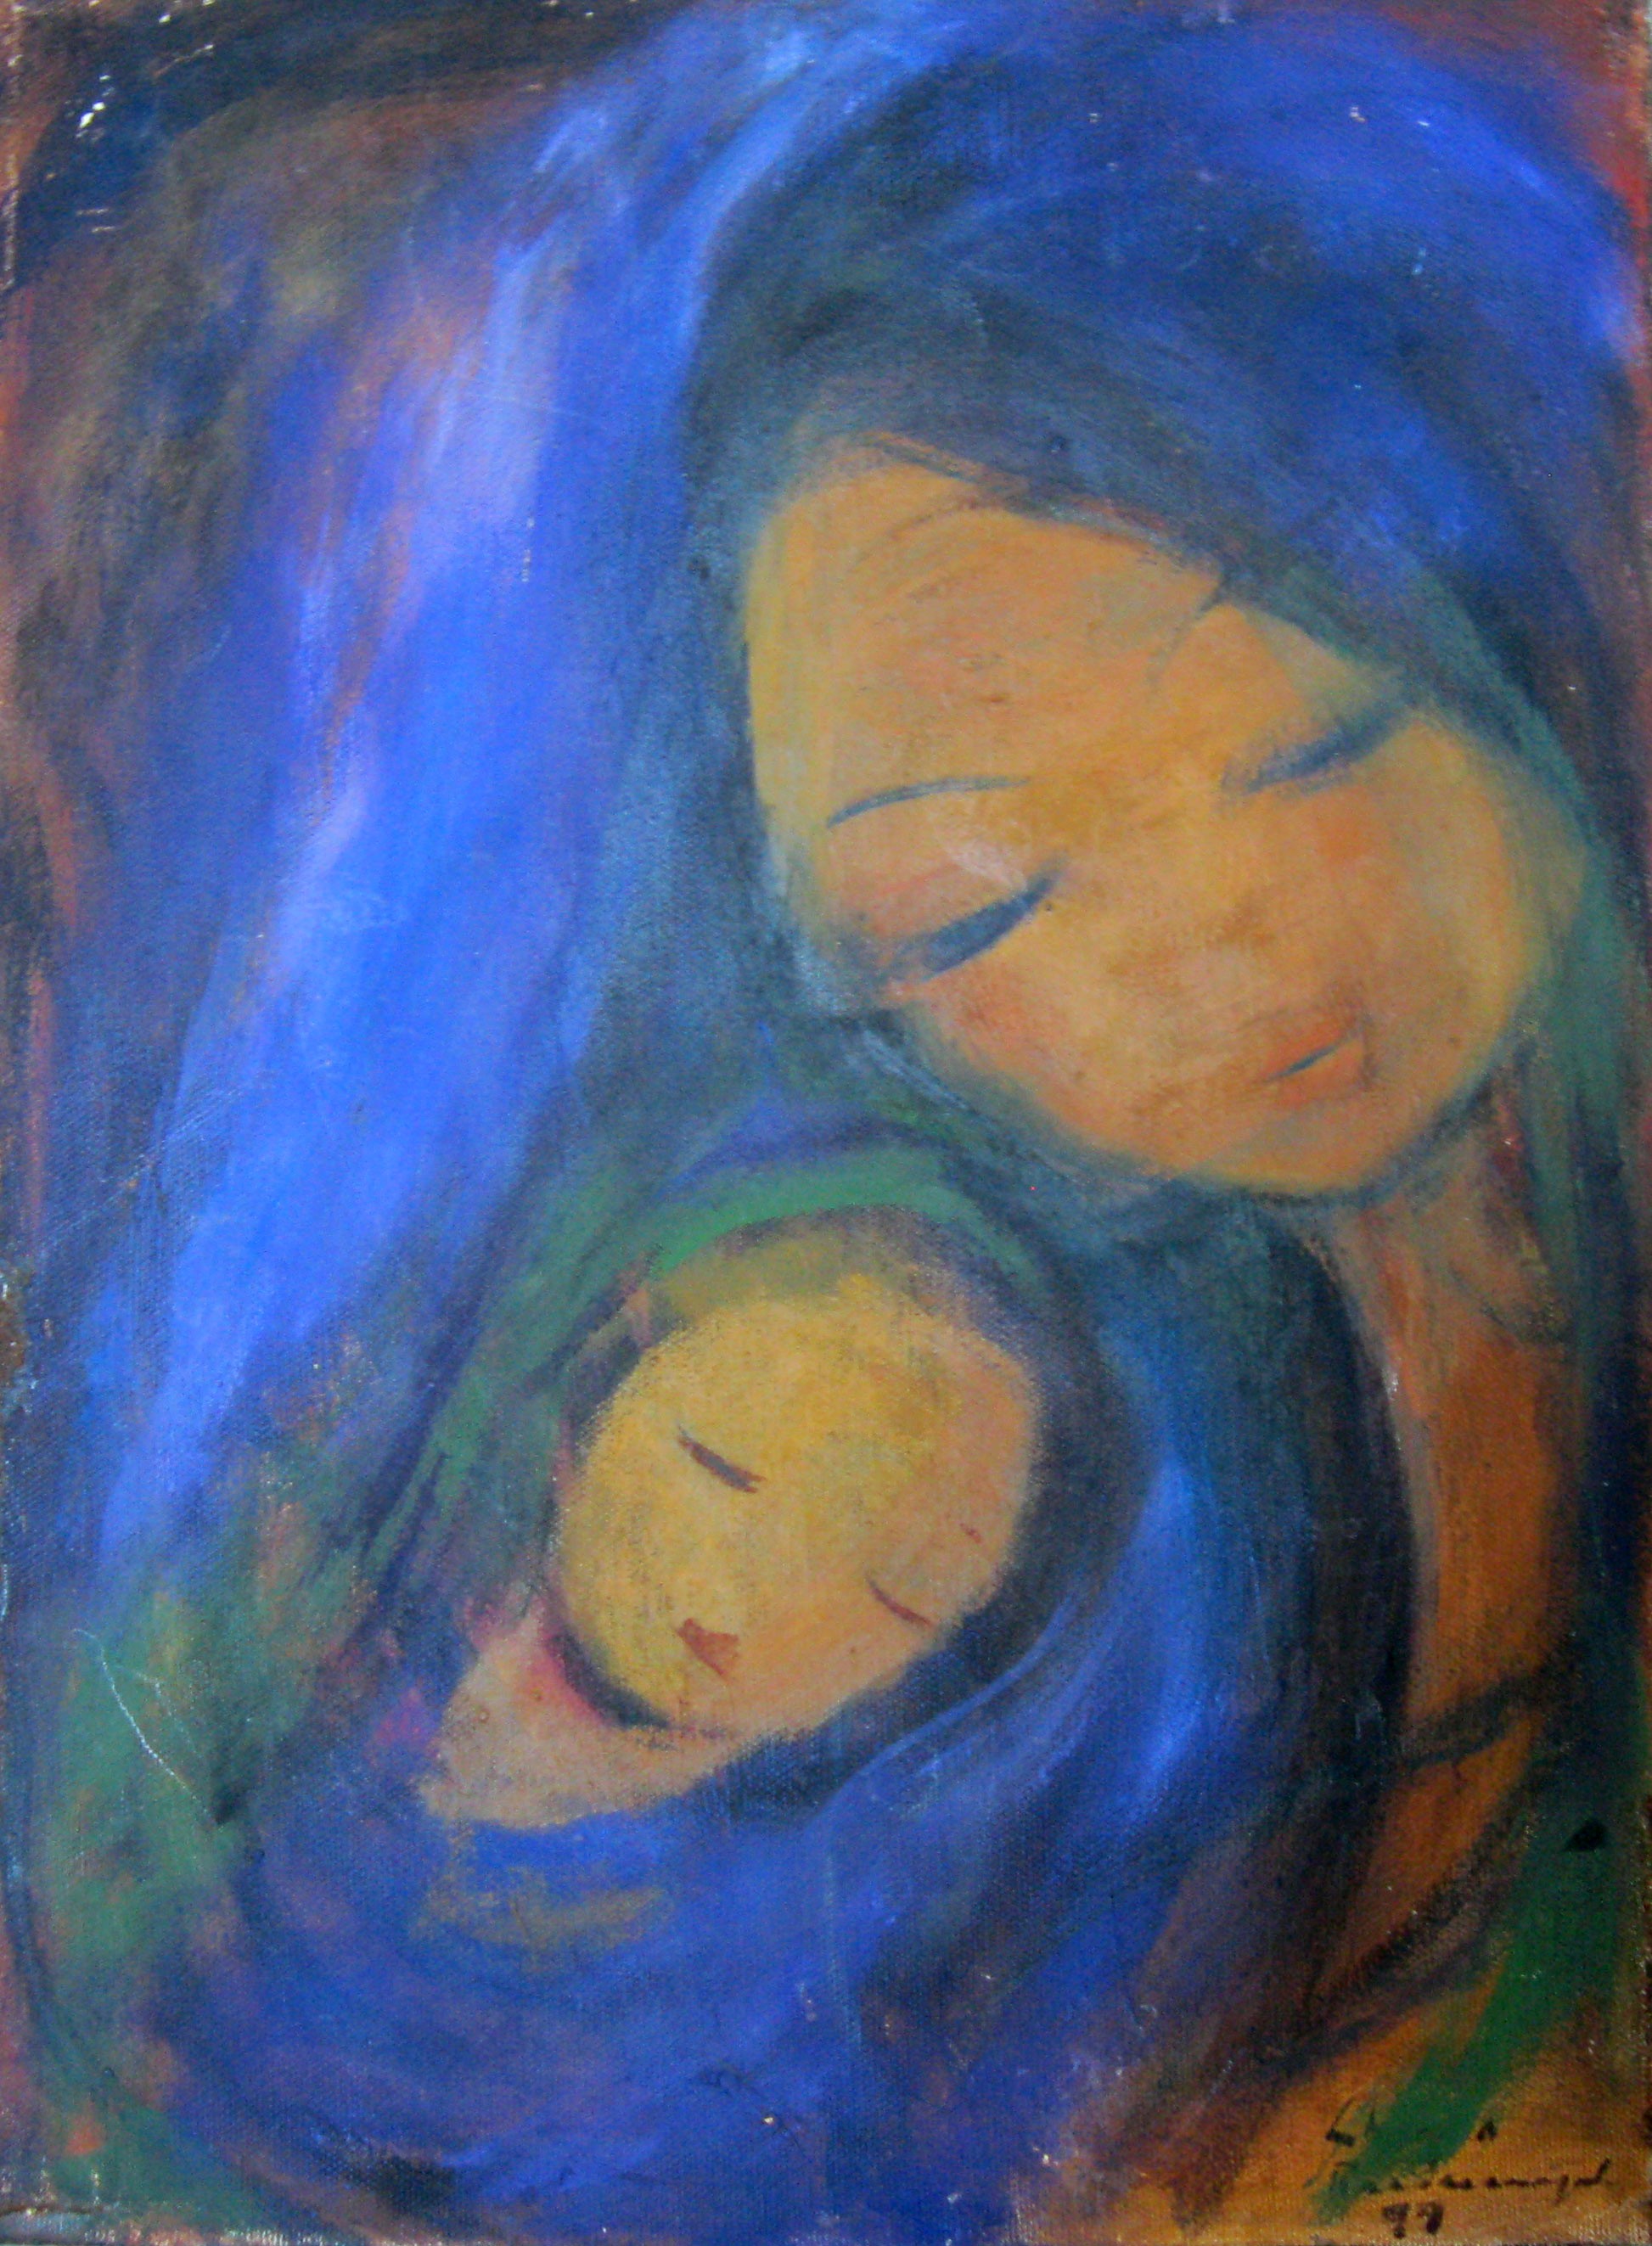 Mother and Child in Blue 1 by Chandra Malalgoda Bandaranayake